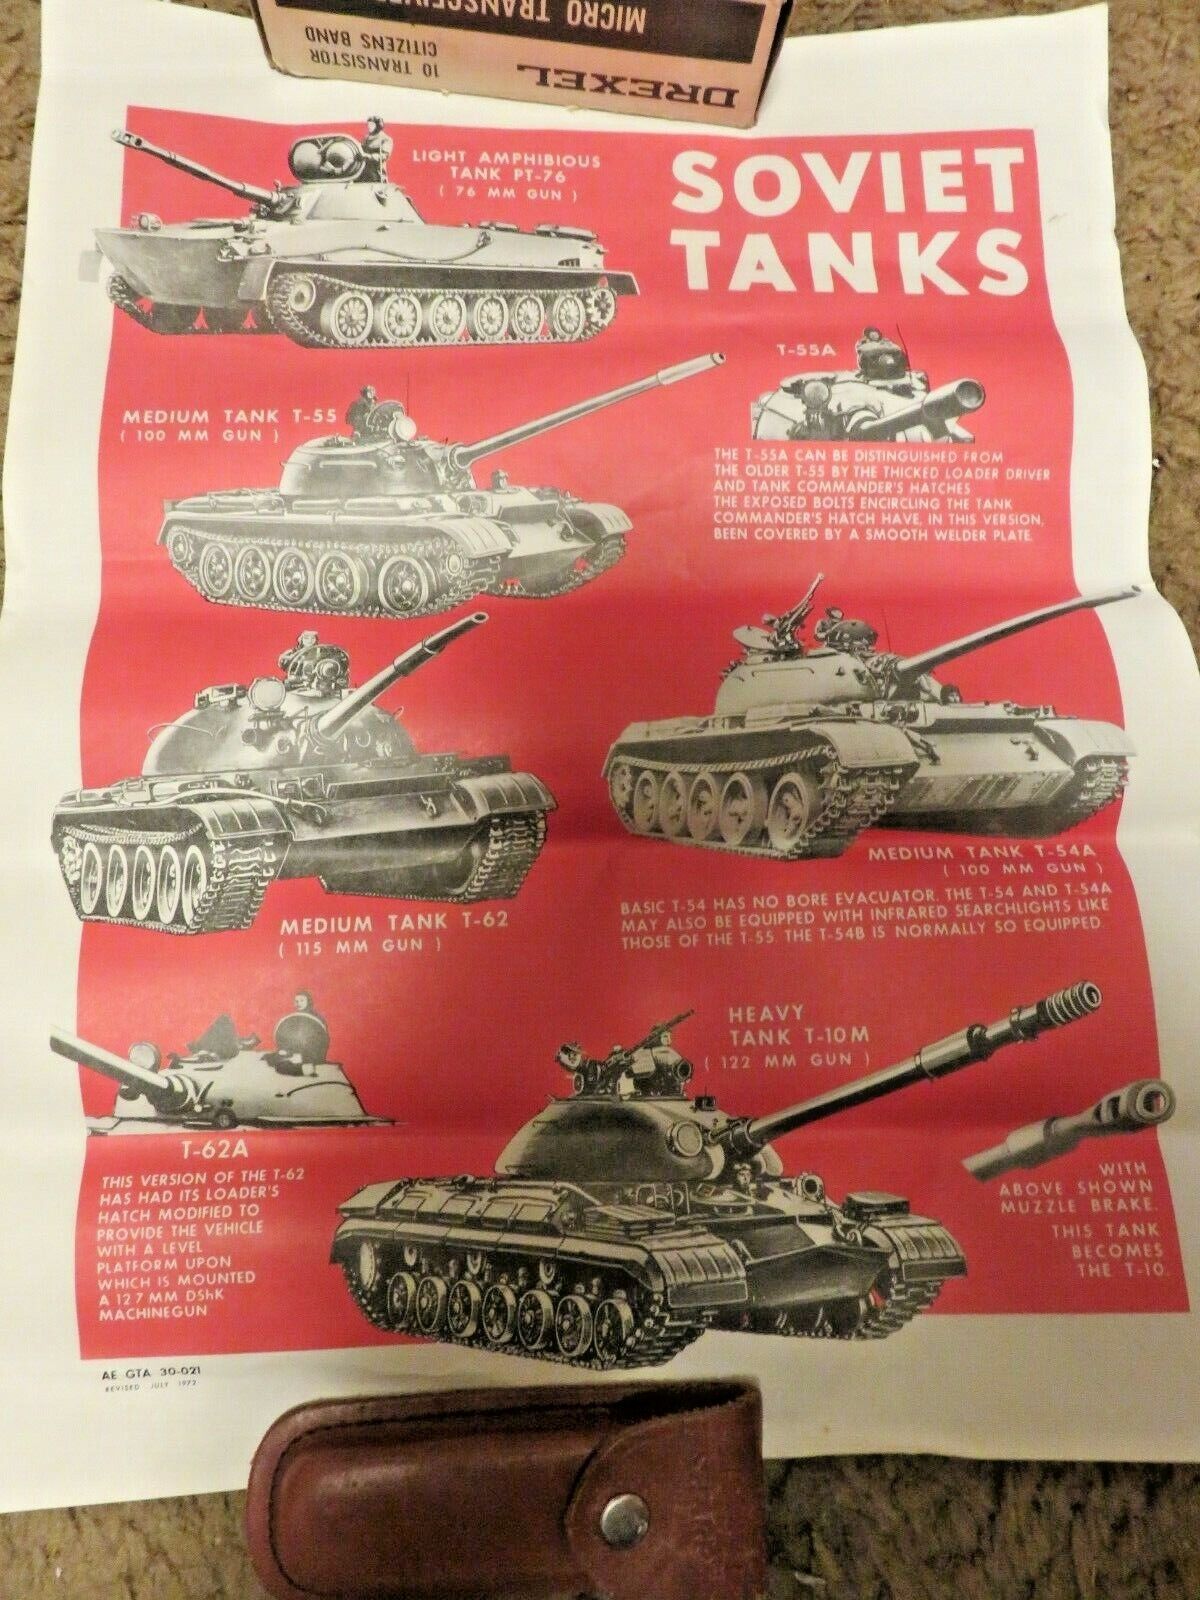 1972 Soviet Union Tanks Poster